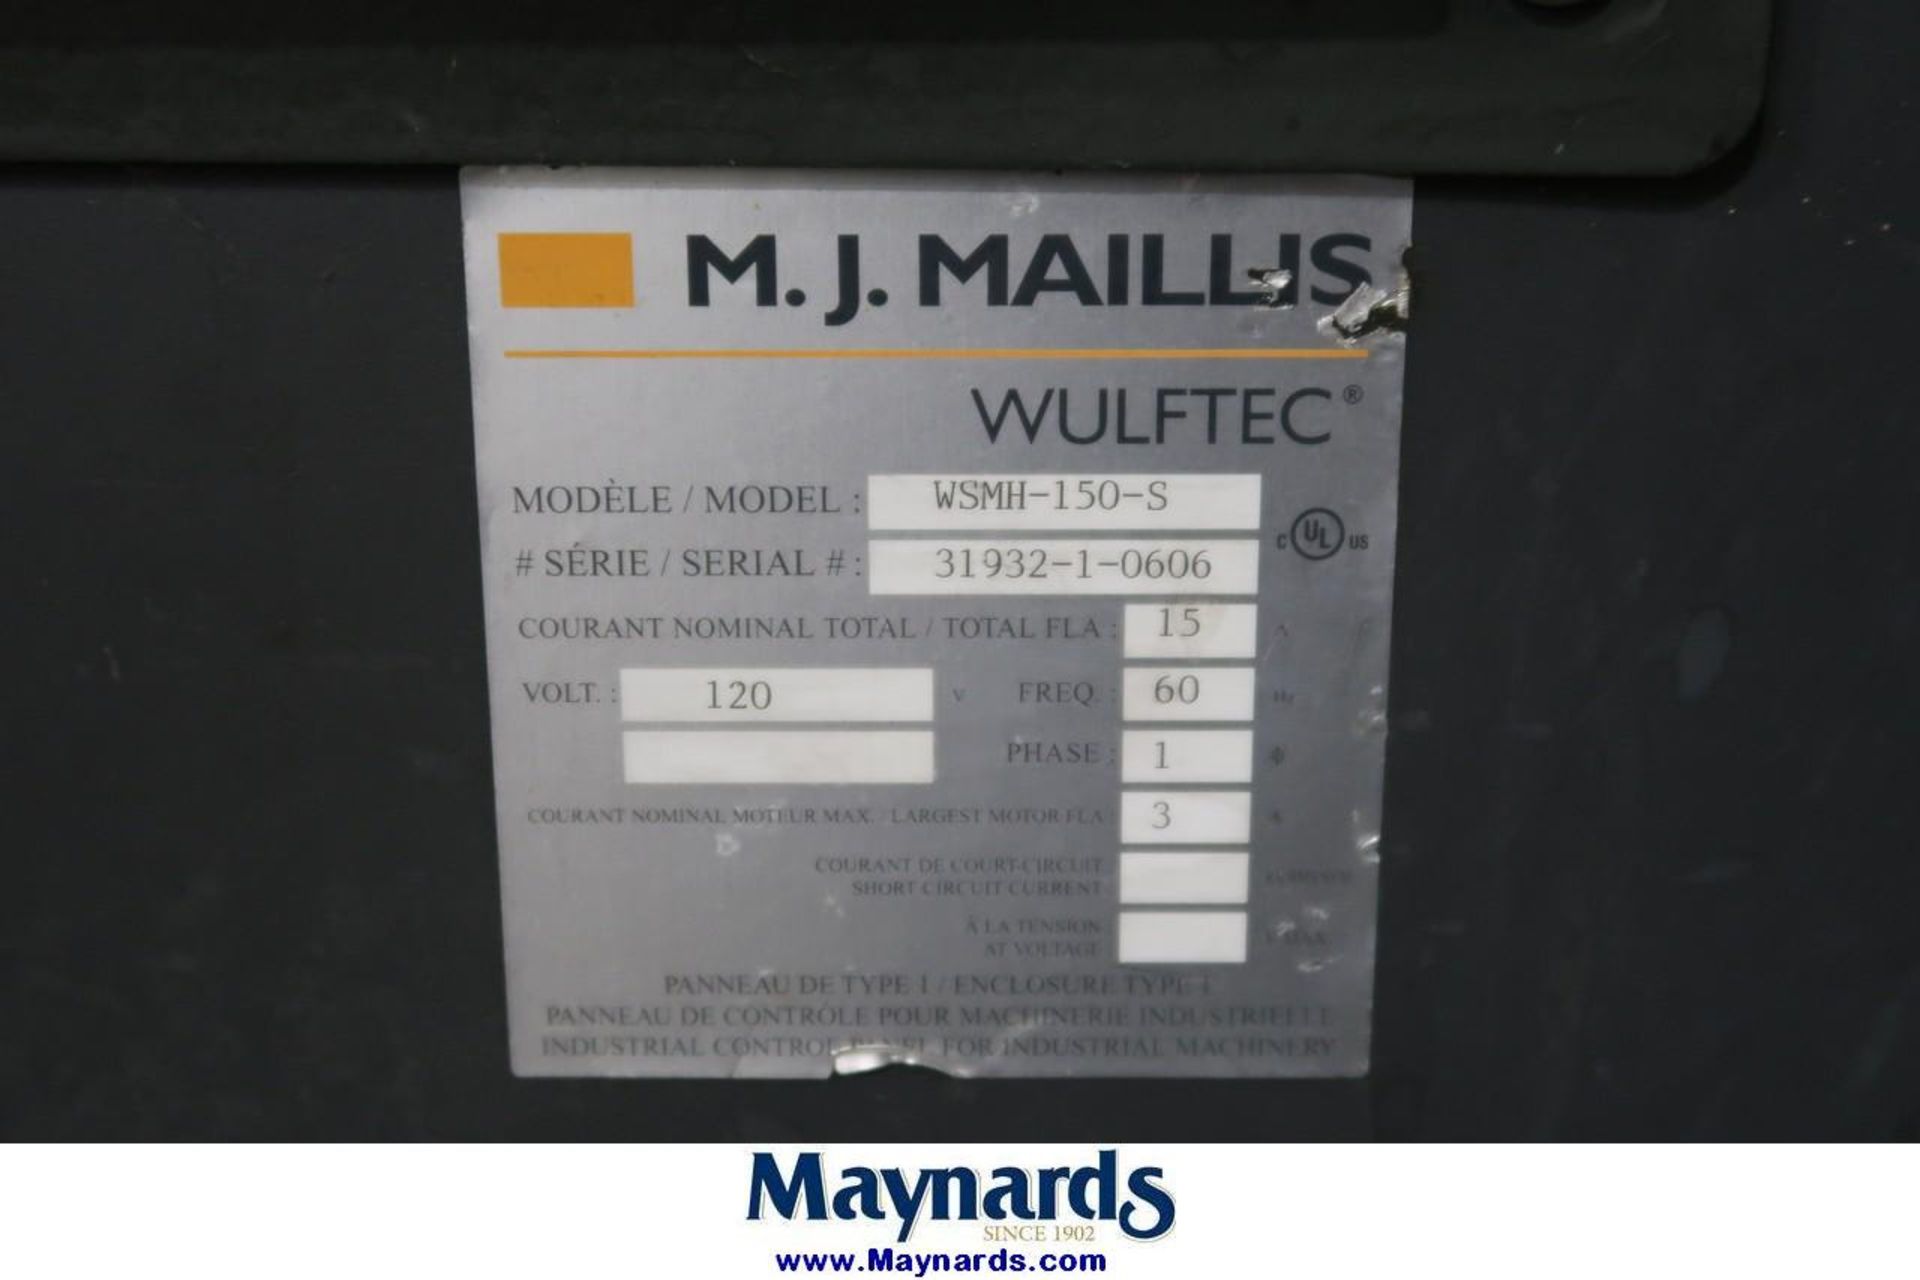 M.J. Maillis WSMH-150-S Pallet Wrapping Machine - Image 5 of 5